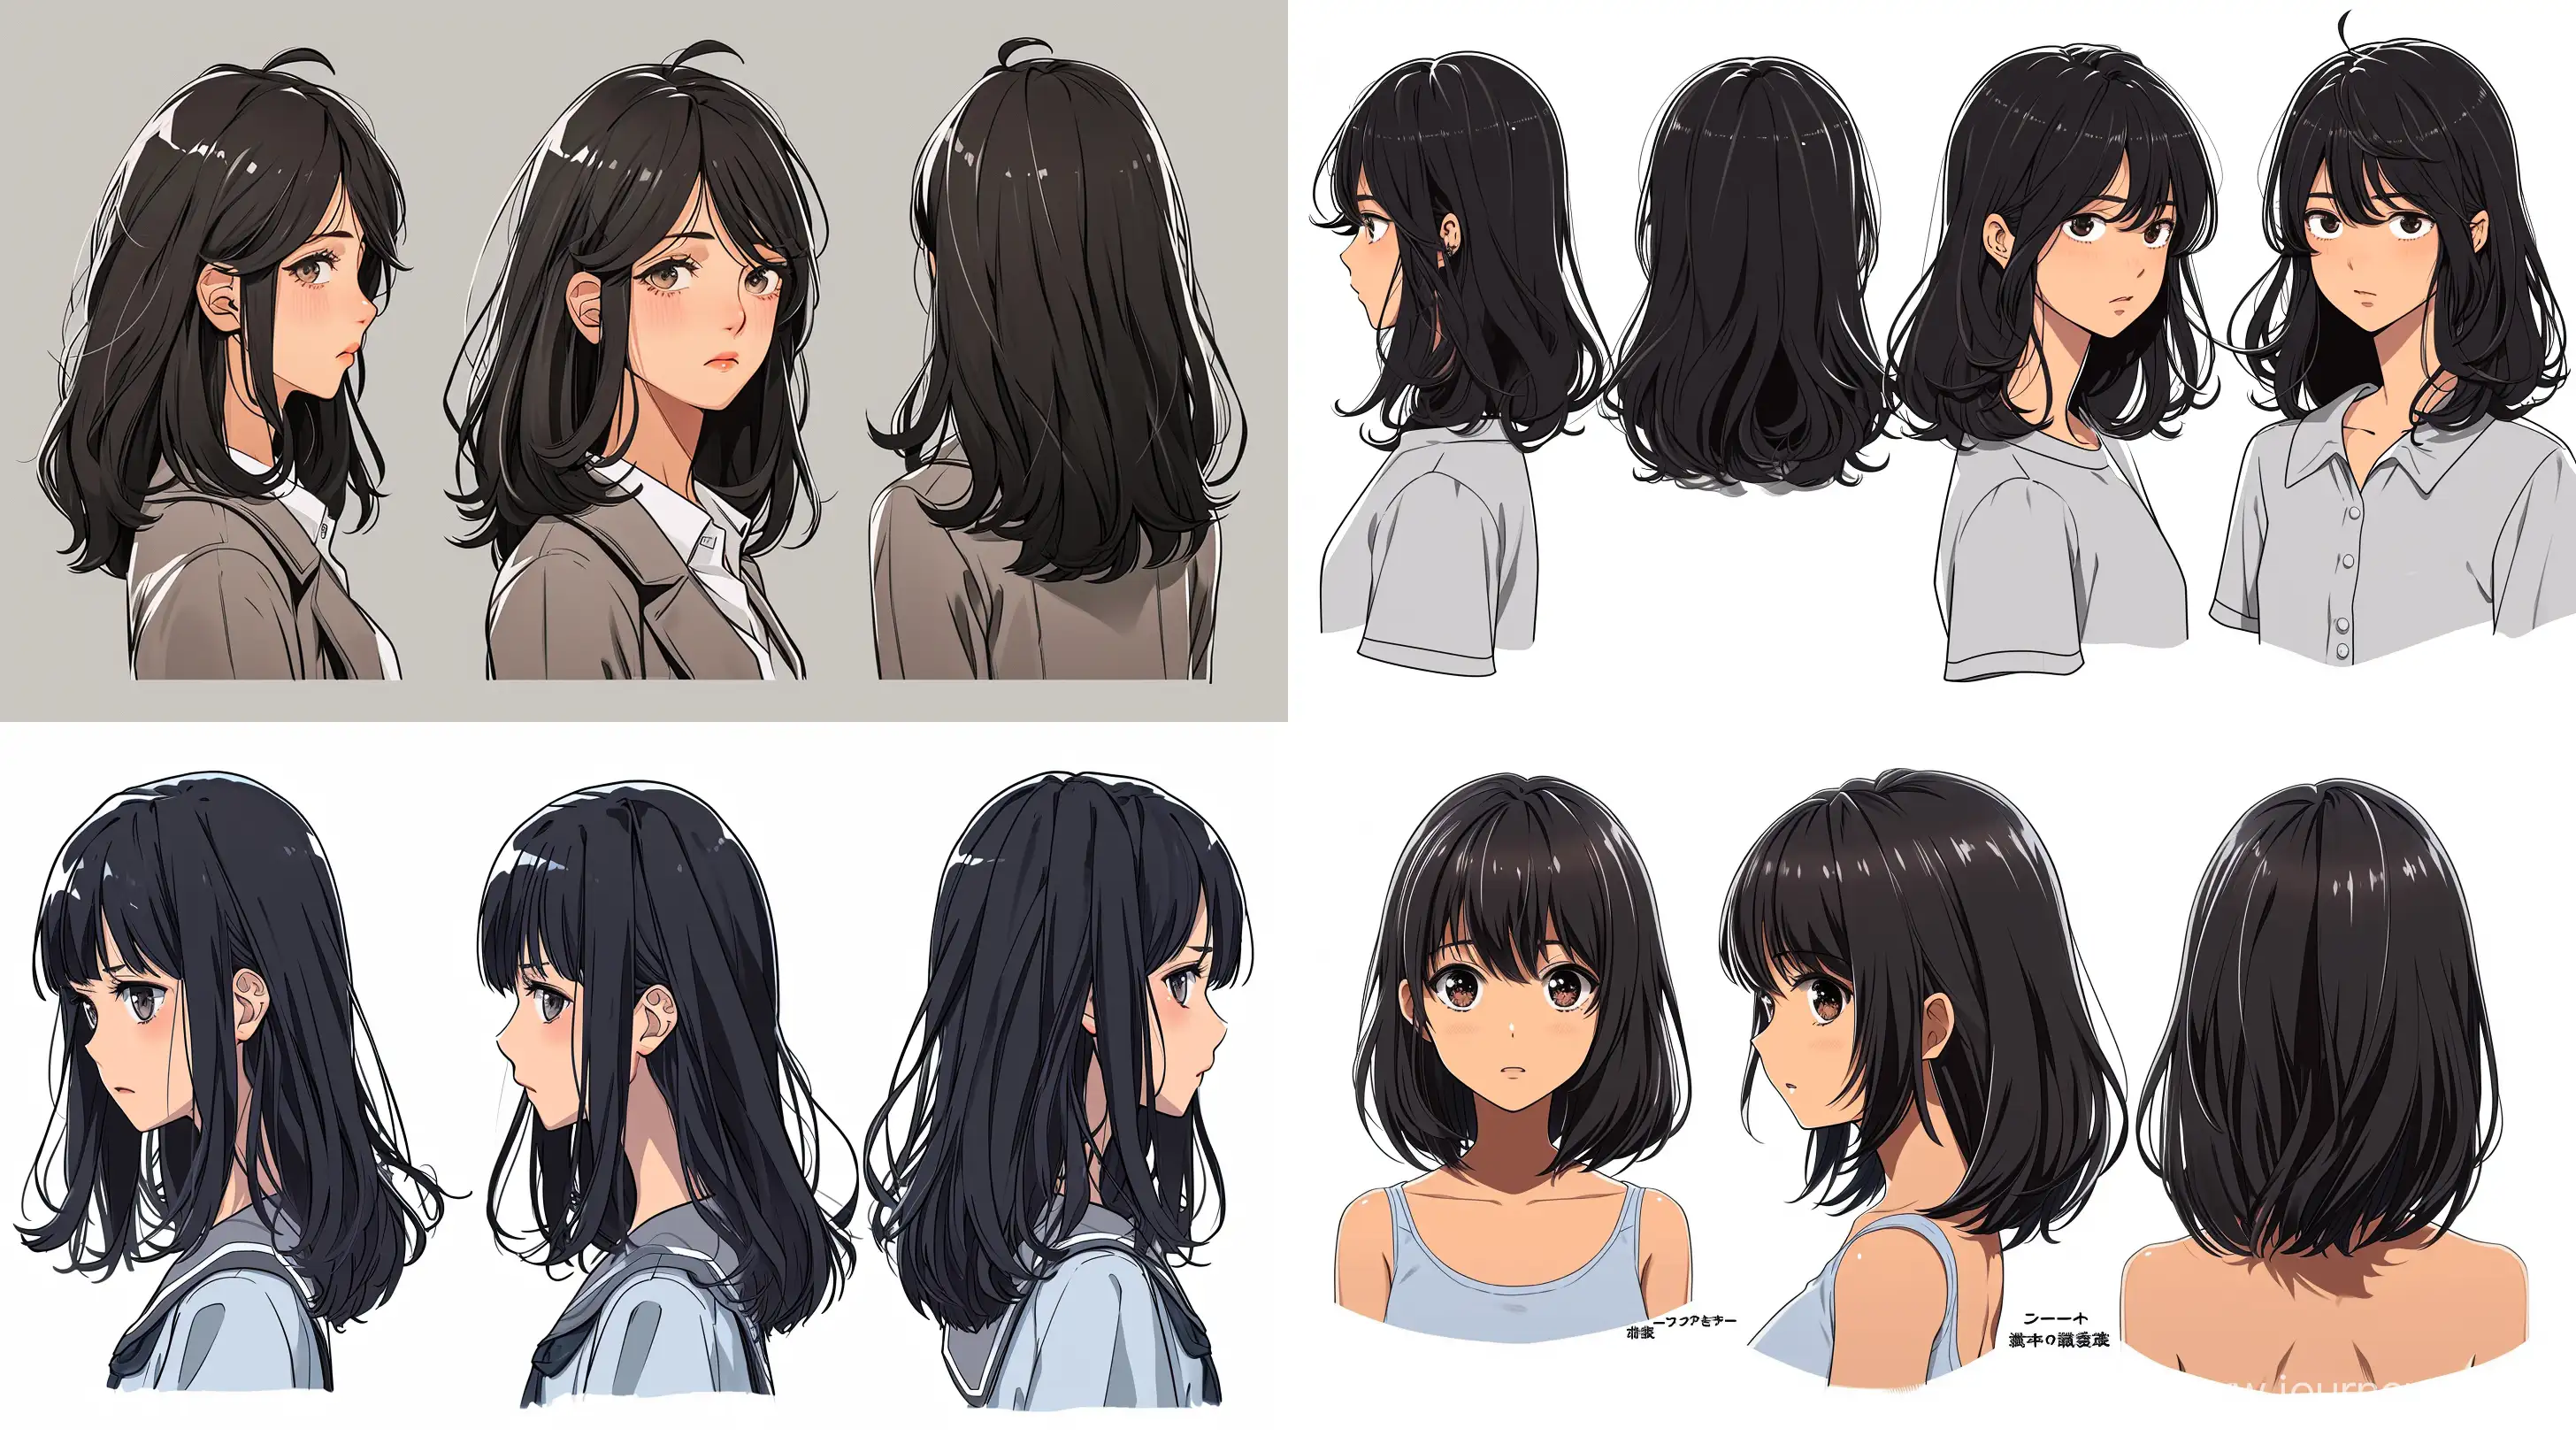 Elegant-High-School-Girl-with-ShoulderLength-Black-Hair-Anime-Style